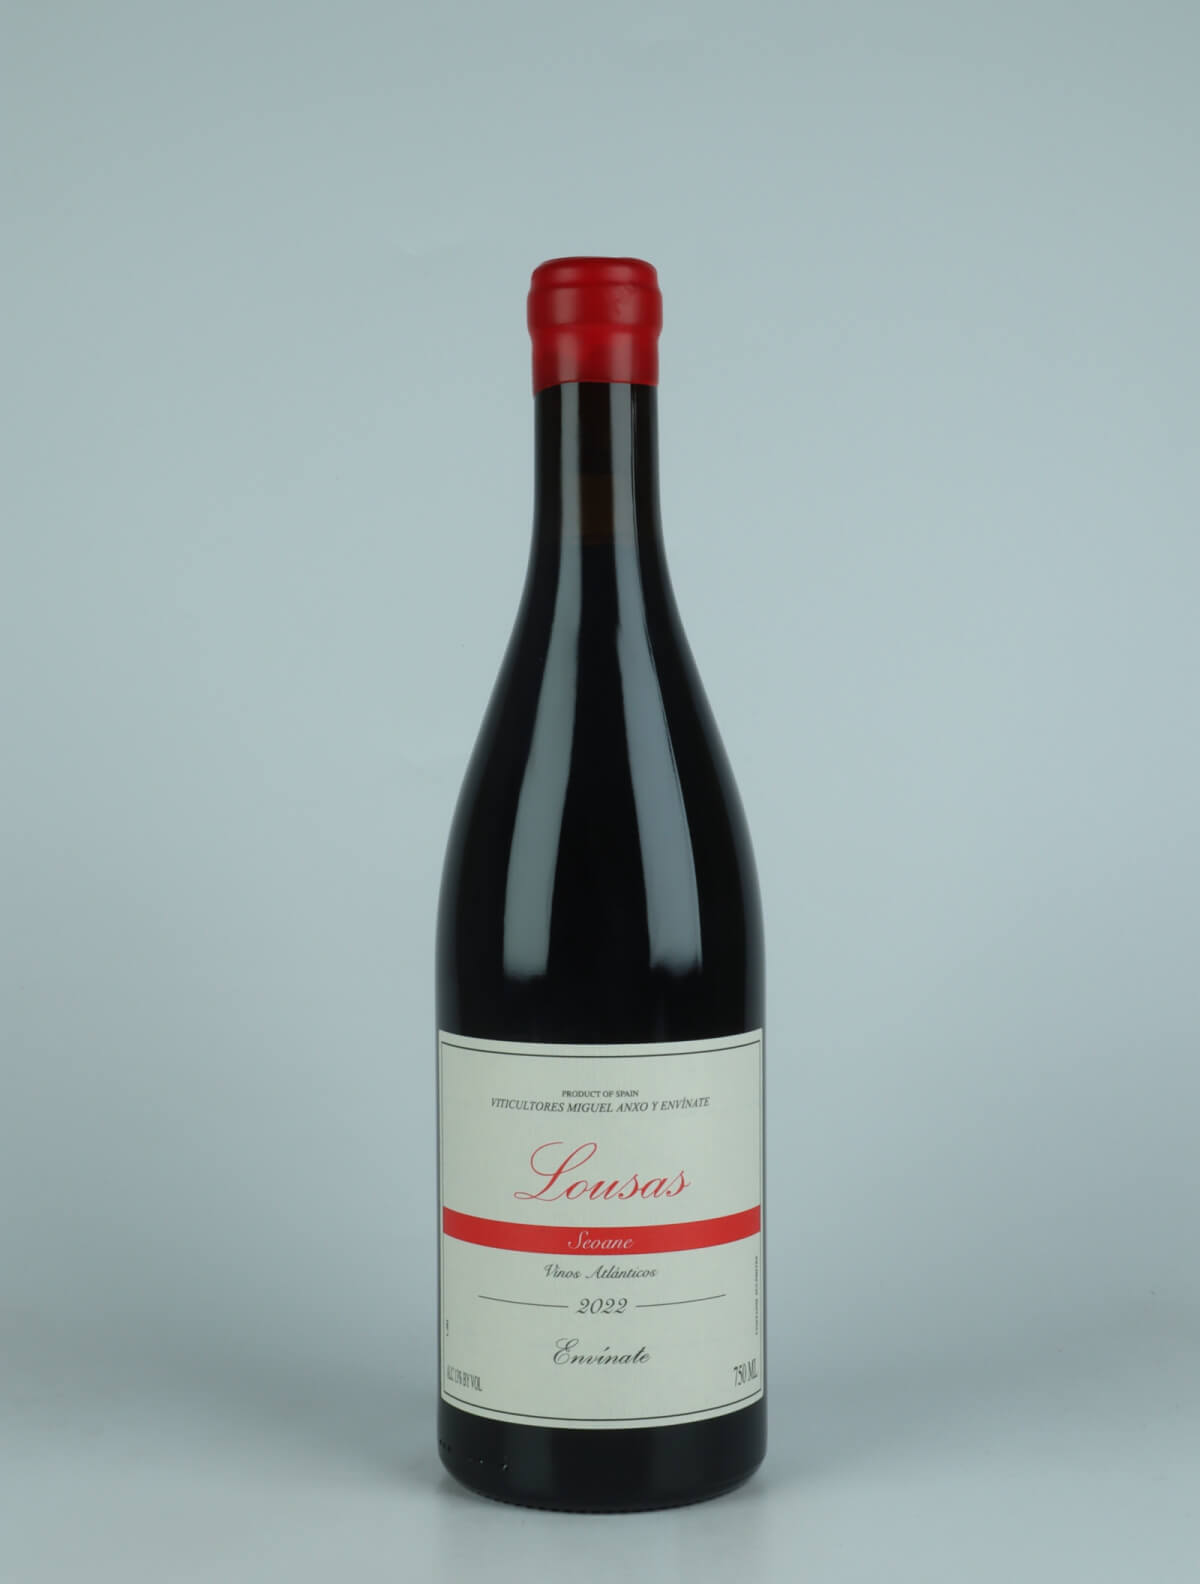 A bottle 2022 Lousas - Seoane - Ribeira Sacra Red wine from Envínate, Ribeira Sacra in Spain